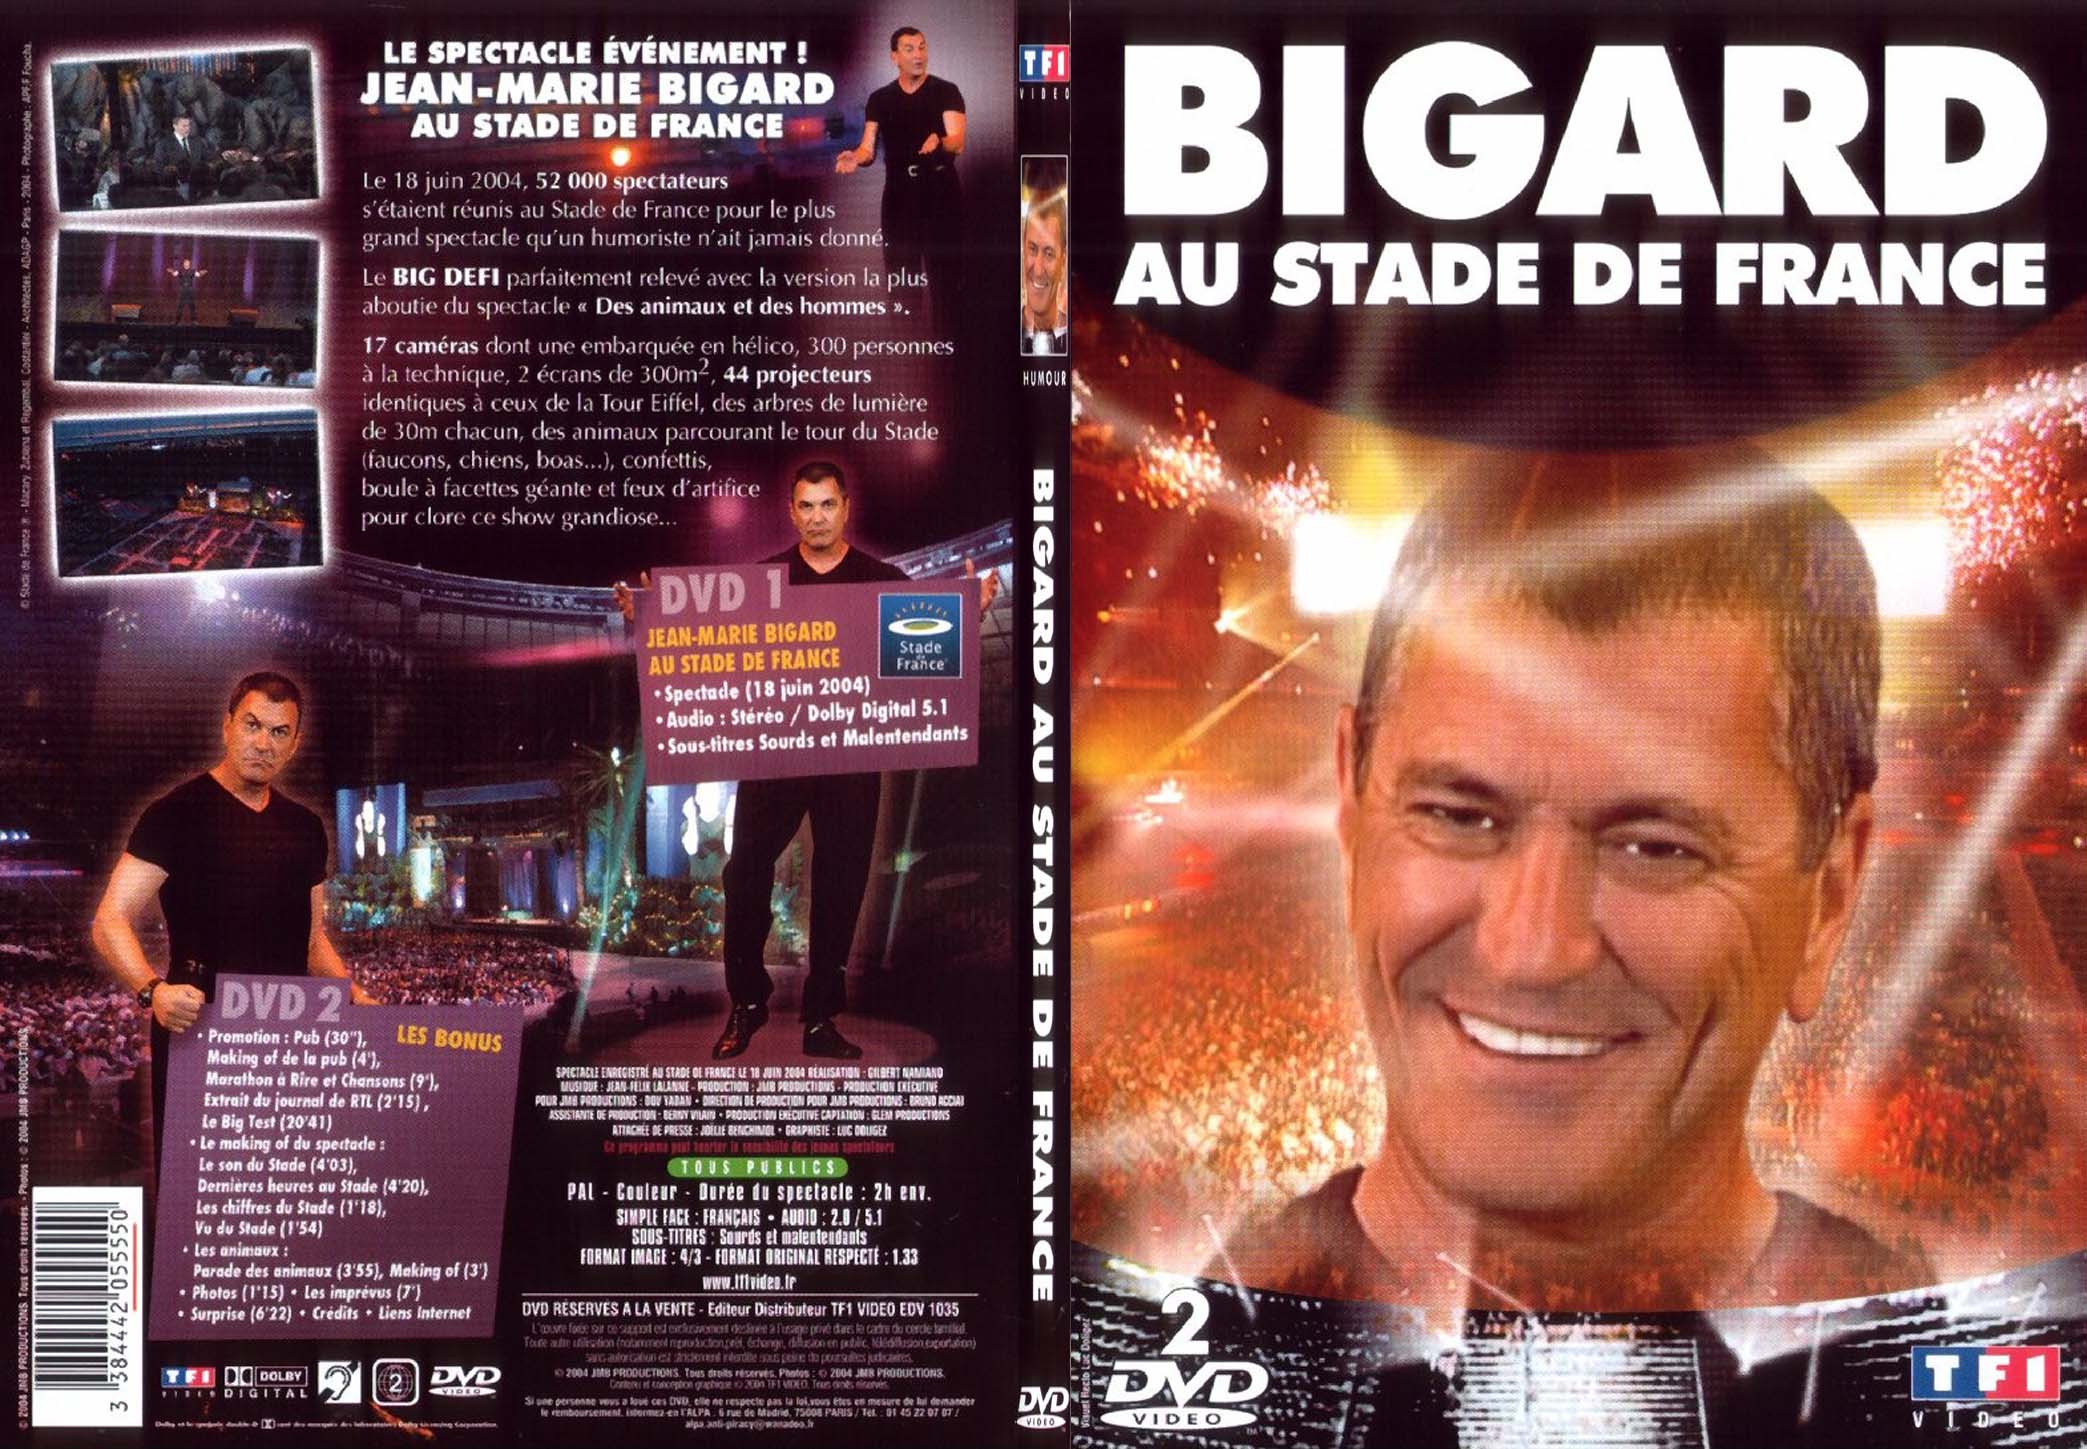 Jaquette DVD Bigard au stade de france - SLIM